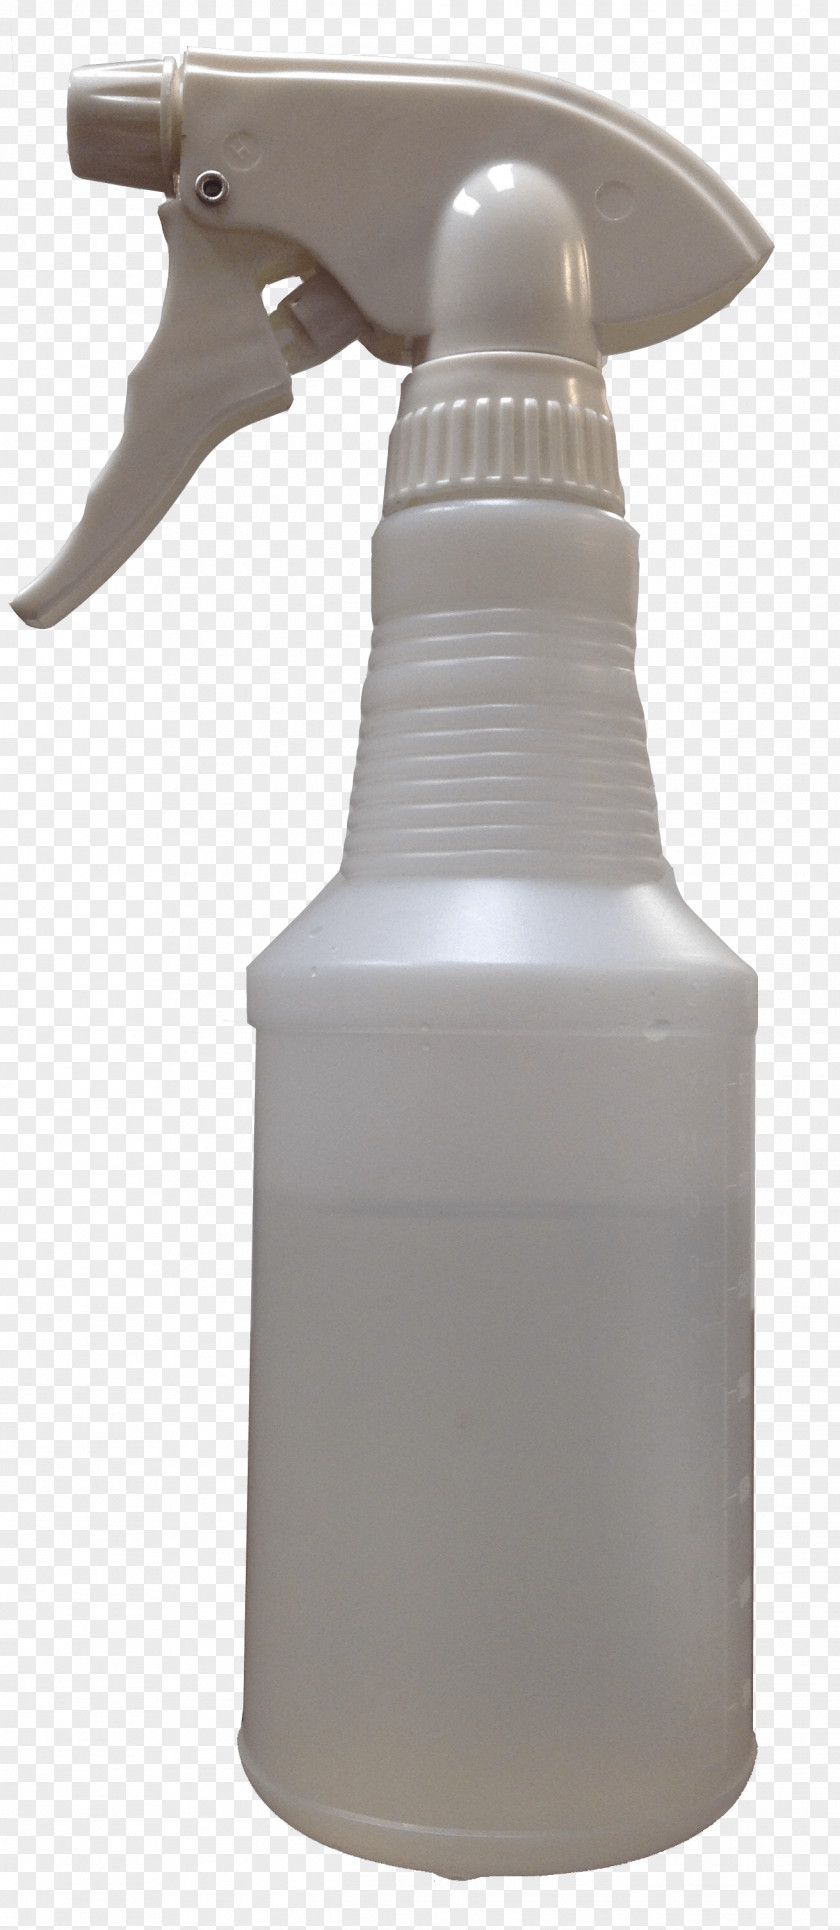 Environmental Labeling Spray Bottle Cleaning Aerosol PNG